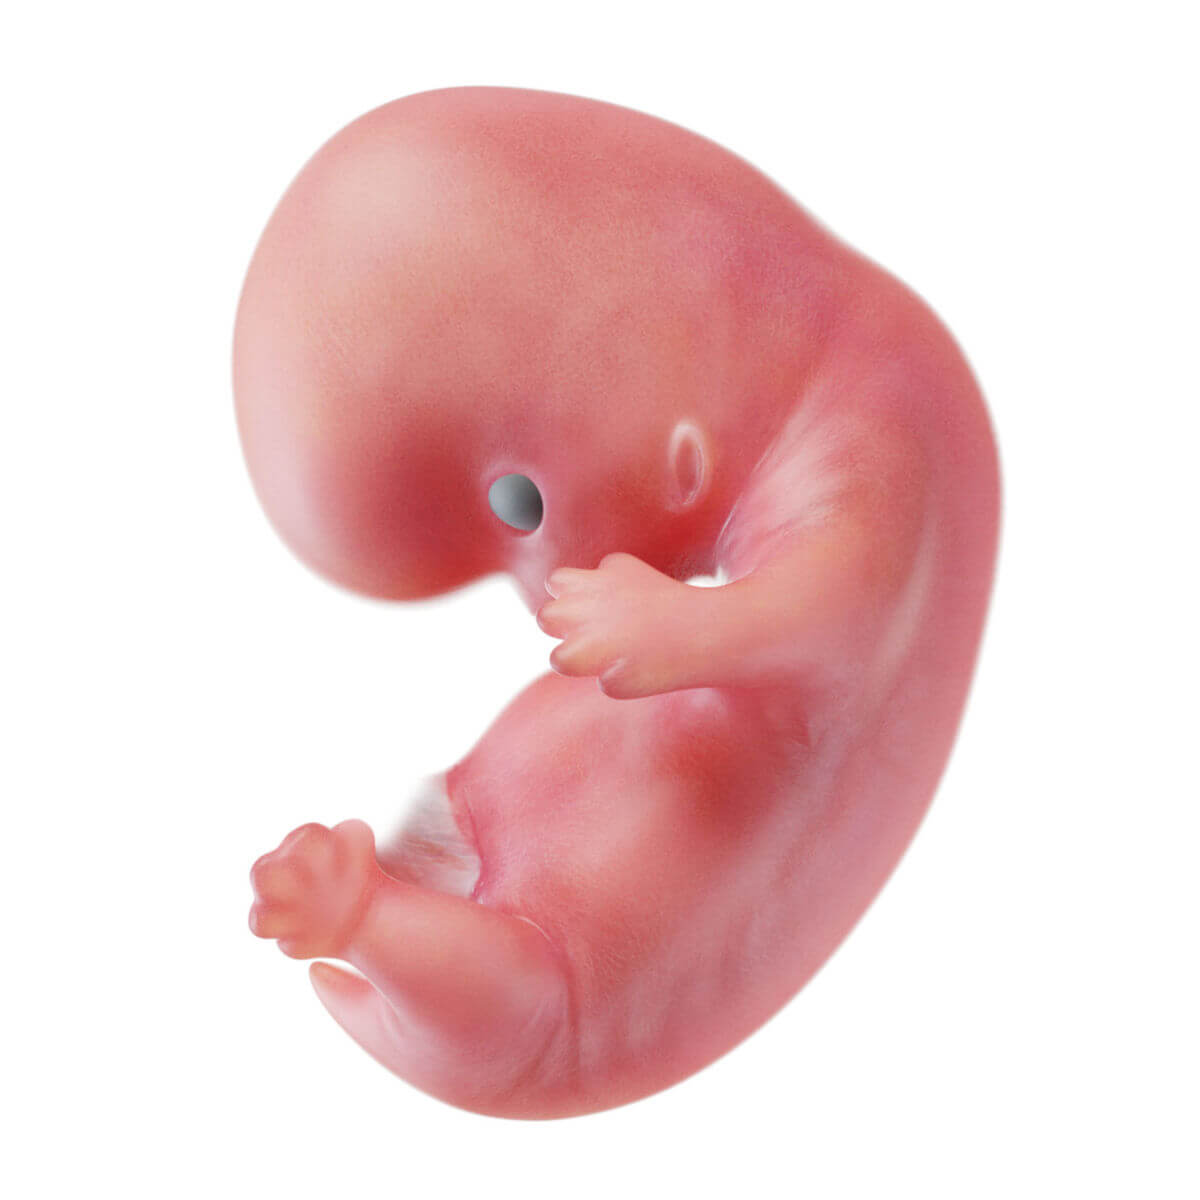 Embryogenese (8. SSW)